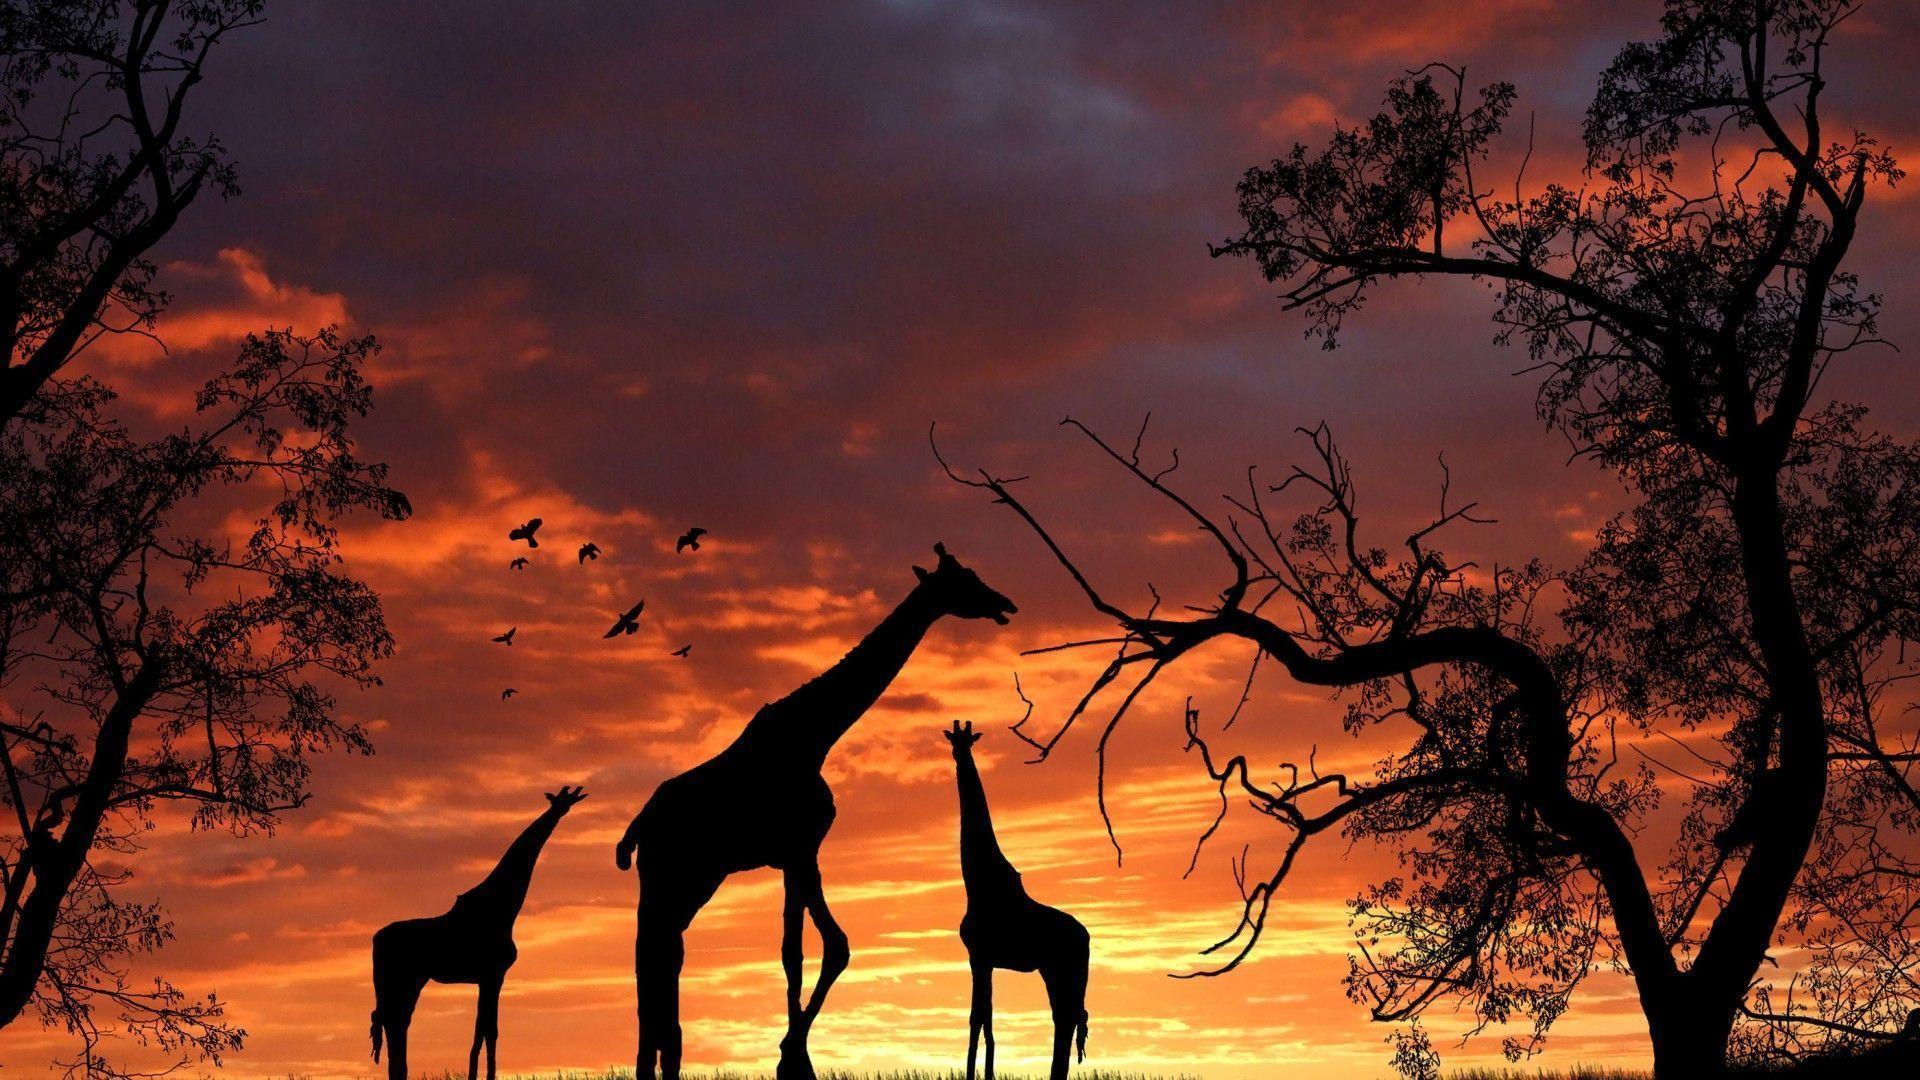 Giraffe Dream Desktop Background Wallpaper, Free Animals Wallpaper